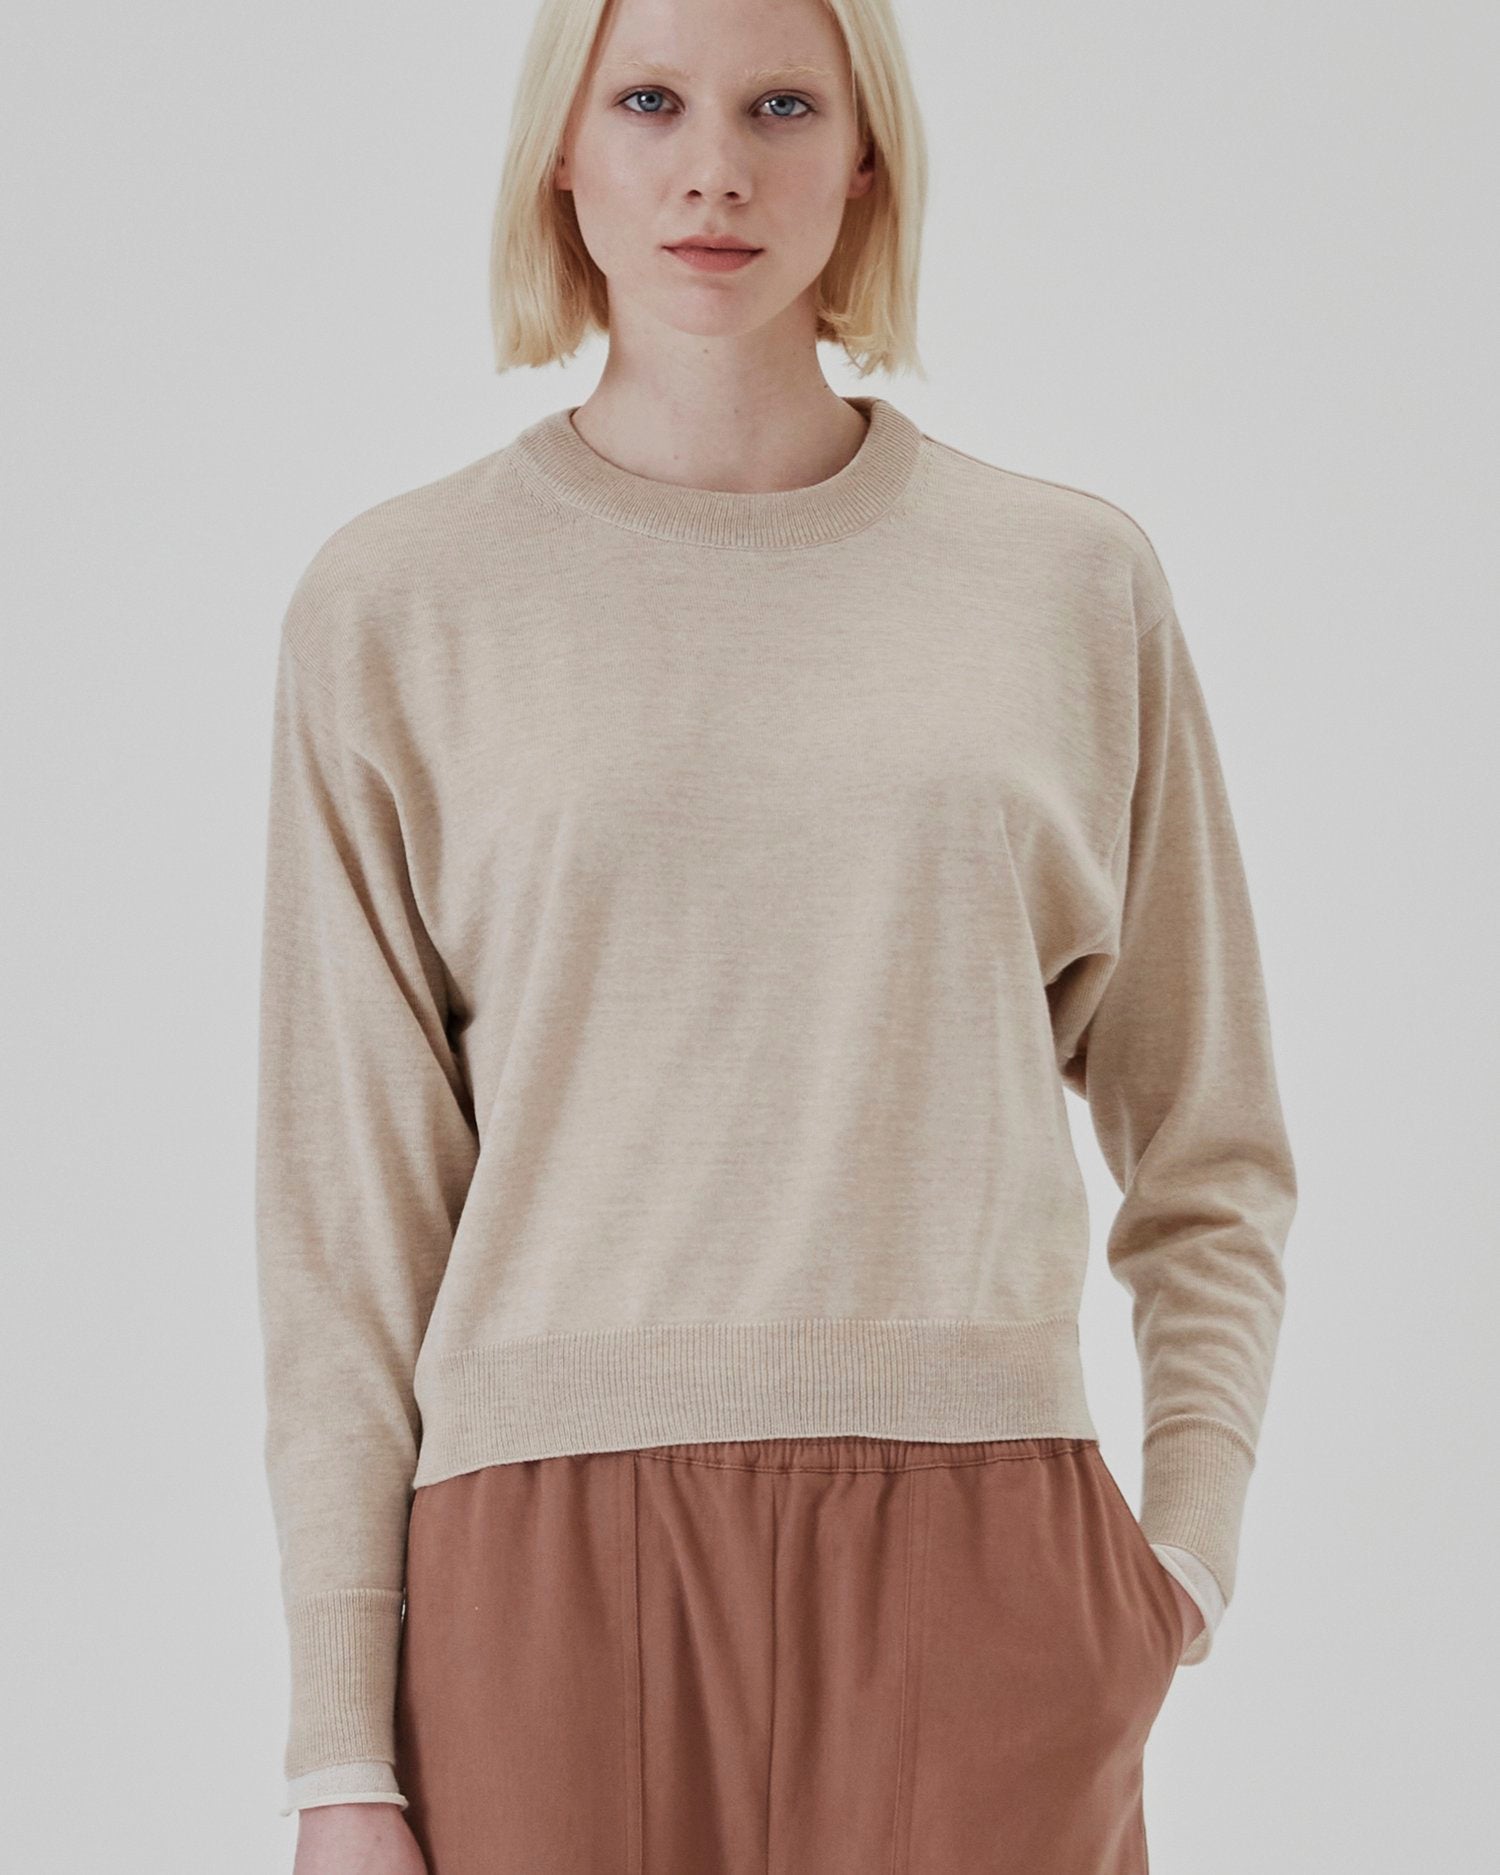 Freya Sand Sweater